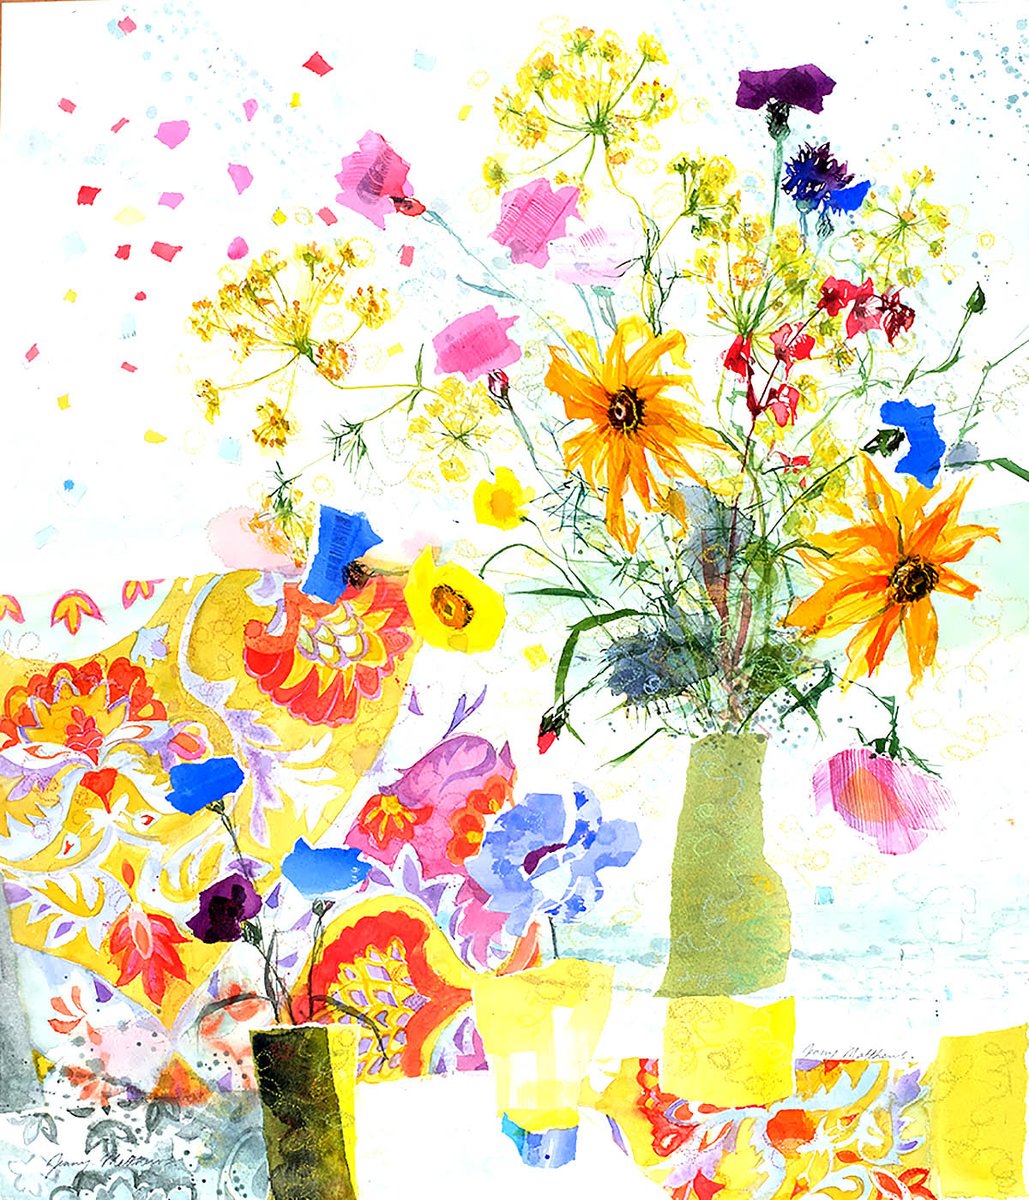 Online until 31 Mar, UNIONgallery in Edinburgh’s current exhibition comprises flower studies by award-winning watercolourist Jenny Matthews.
https://t.co/xuGmjppu5G
@UNIONgallery1
#artmag #scottishart #scottishgalleries #scottishartonline #scottishpainting https://t.co/MCeJ5CPftH